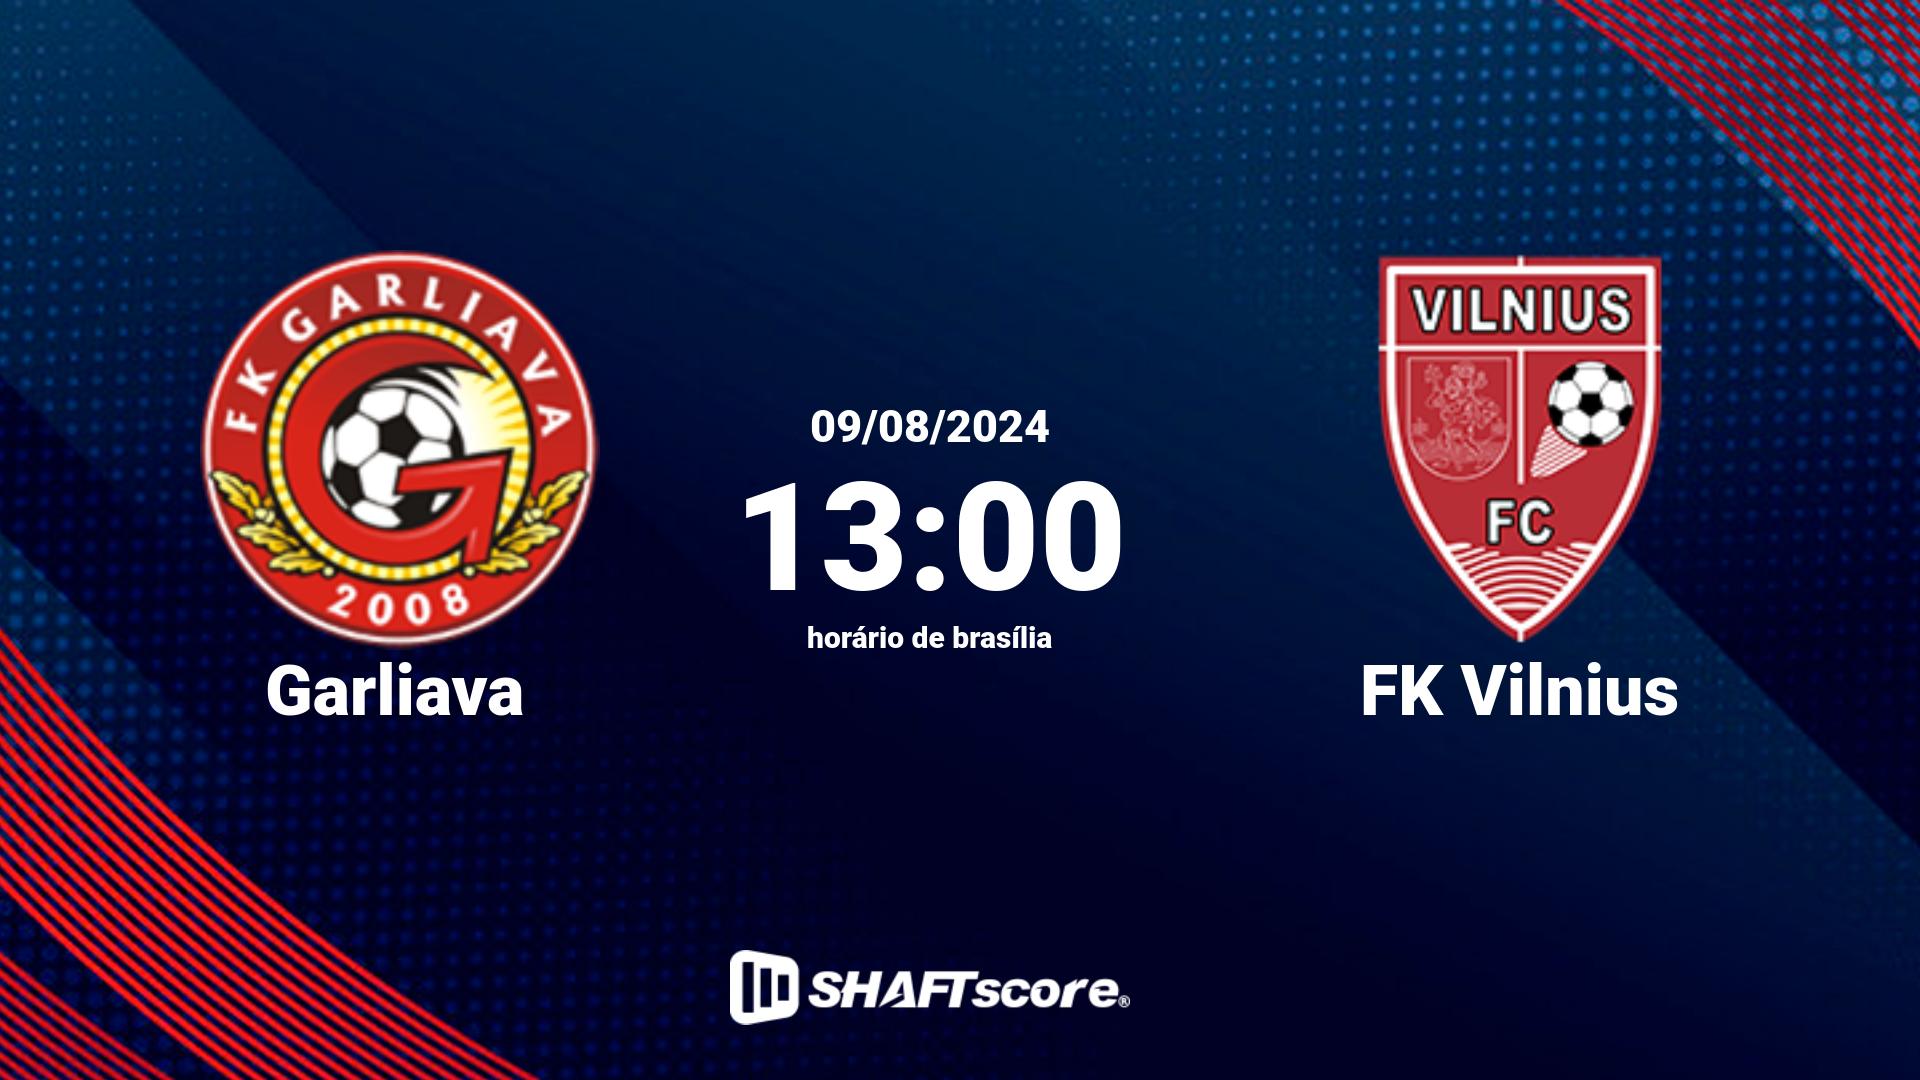 Estatísticas do jogo Garliava vs FK Vilnius 09.08 13:00